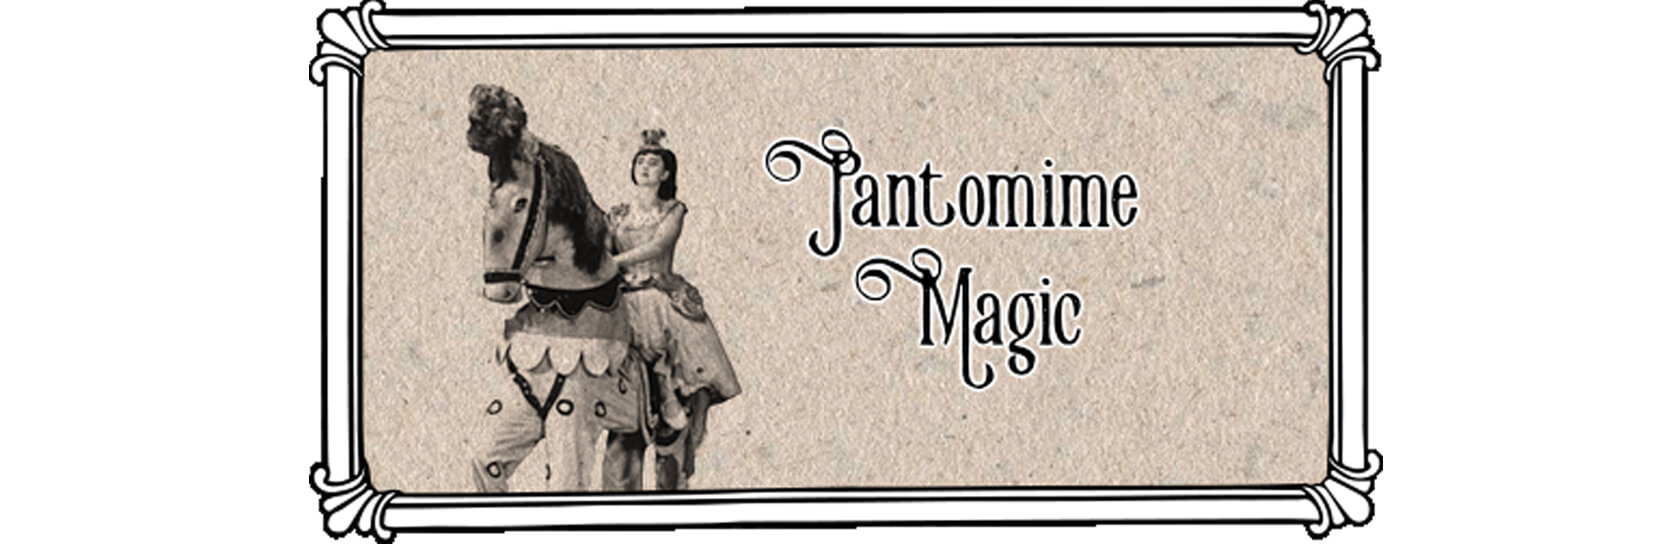 Darlington Hippodrome PowerPoint Slides - Topic 3 - Pantomime Magic